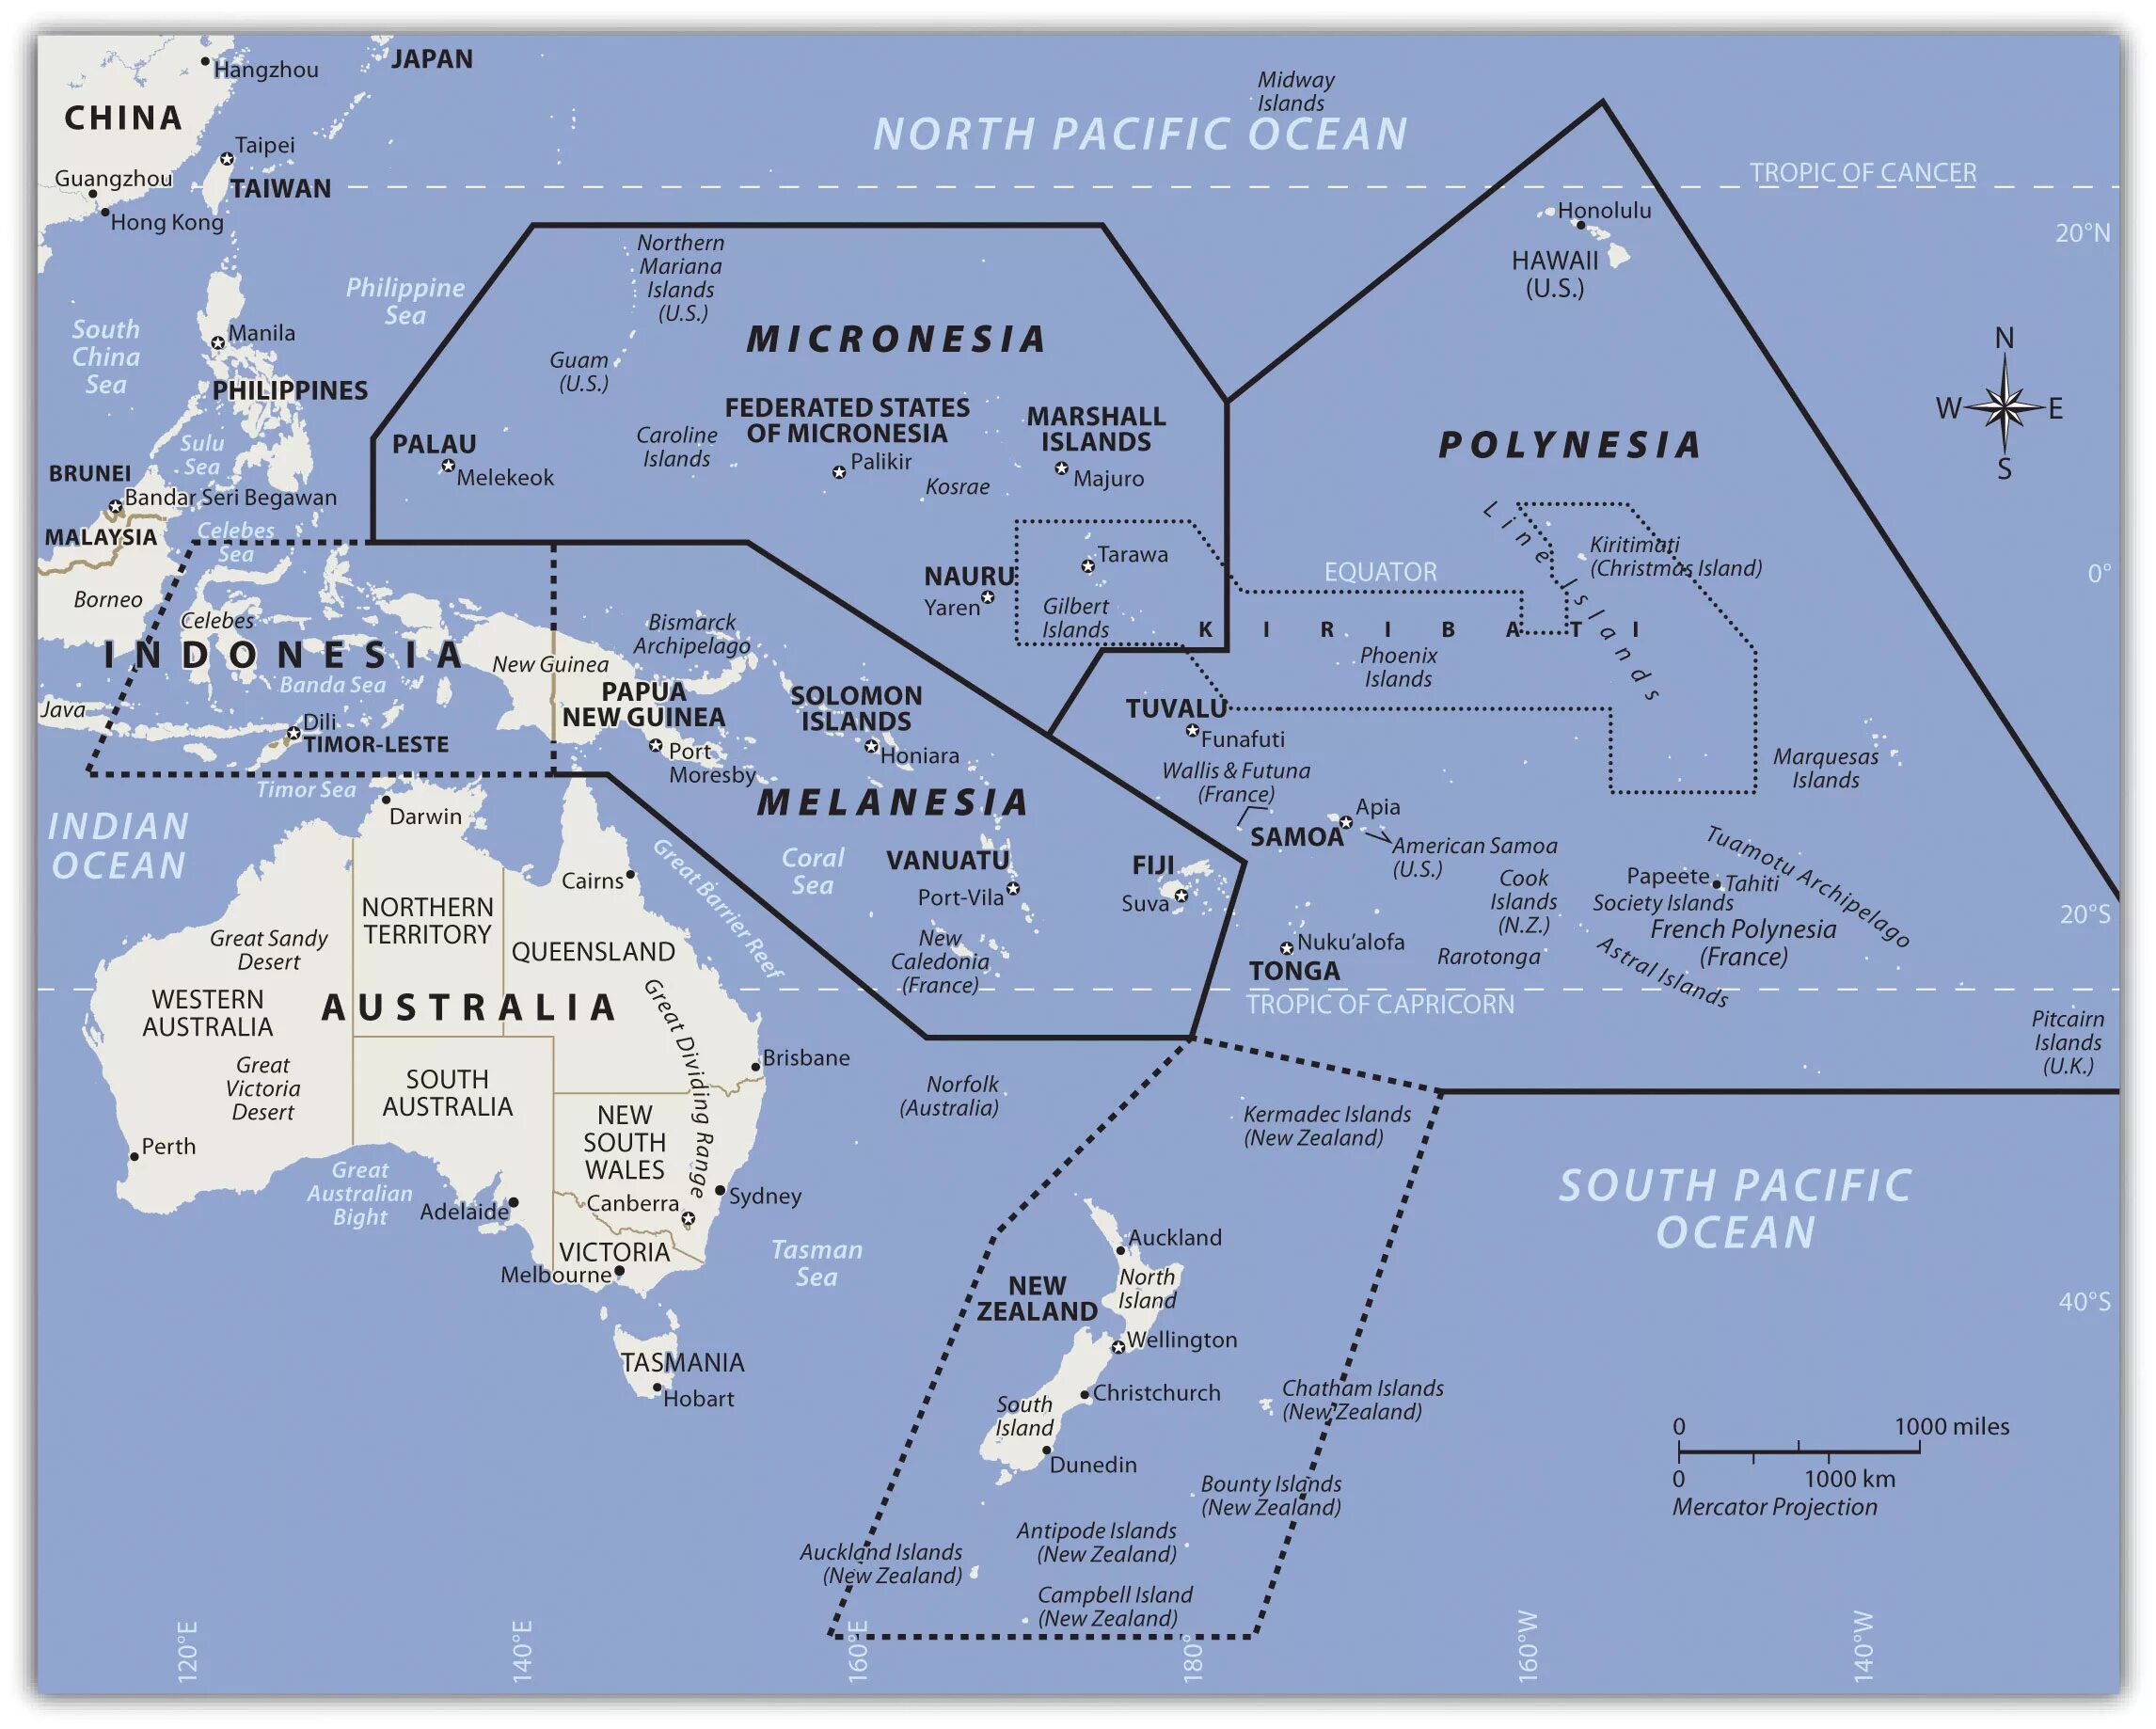 Австралия Меланезия Полинезия Микронезия. Государства Океании Меланезия. Карта Океании Меланезия Полинезия Микронезия. Границы Океании (Меланезия, Микронезия, Полинезия).